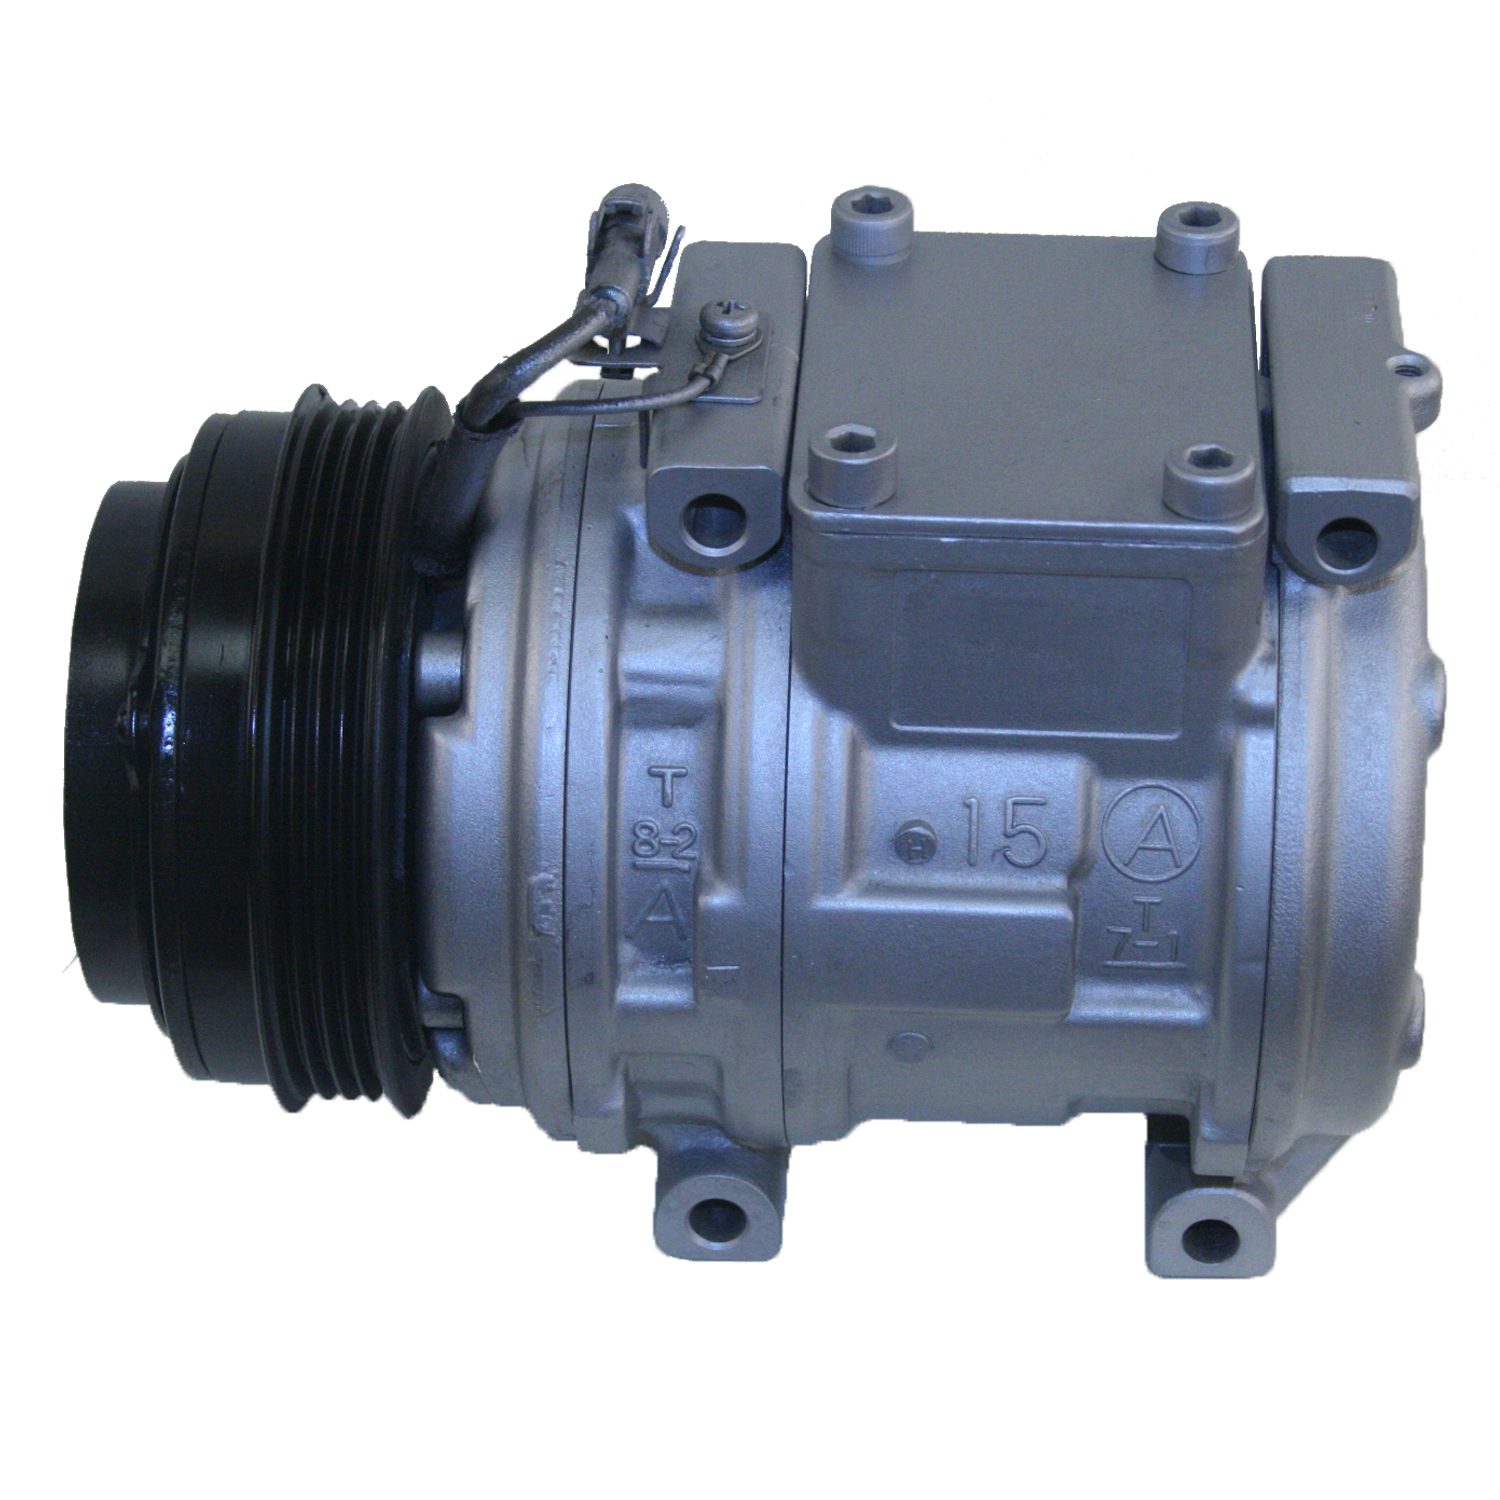 TCW Compressor 31210.407 Remanufactured